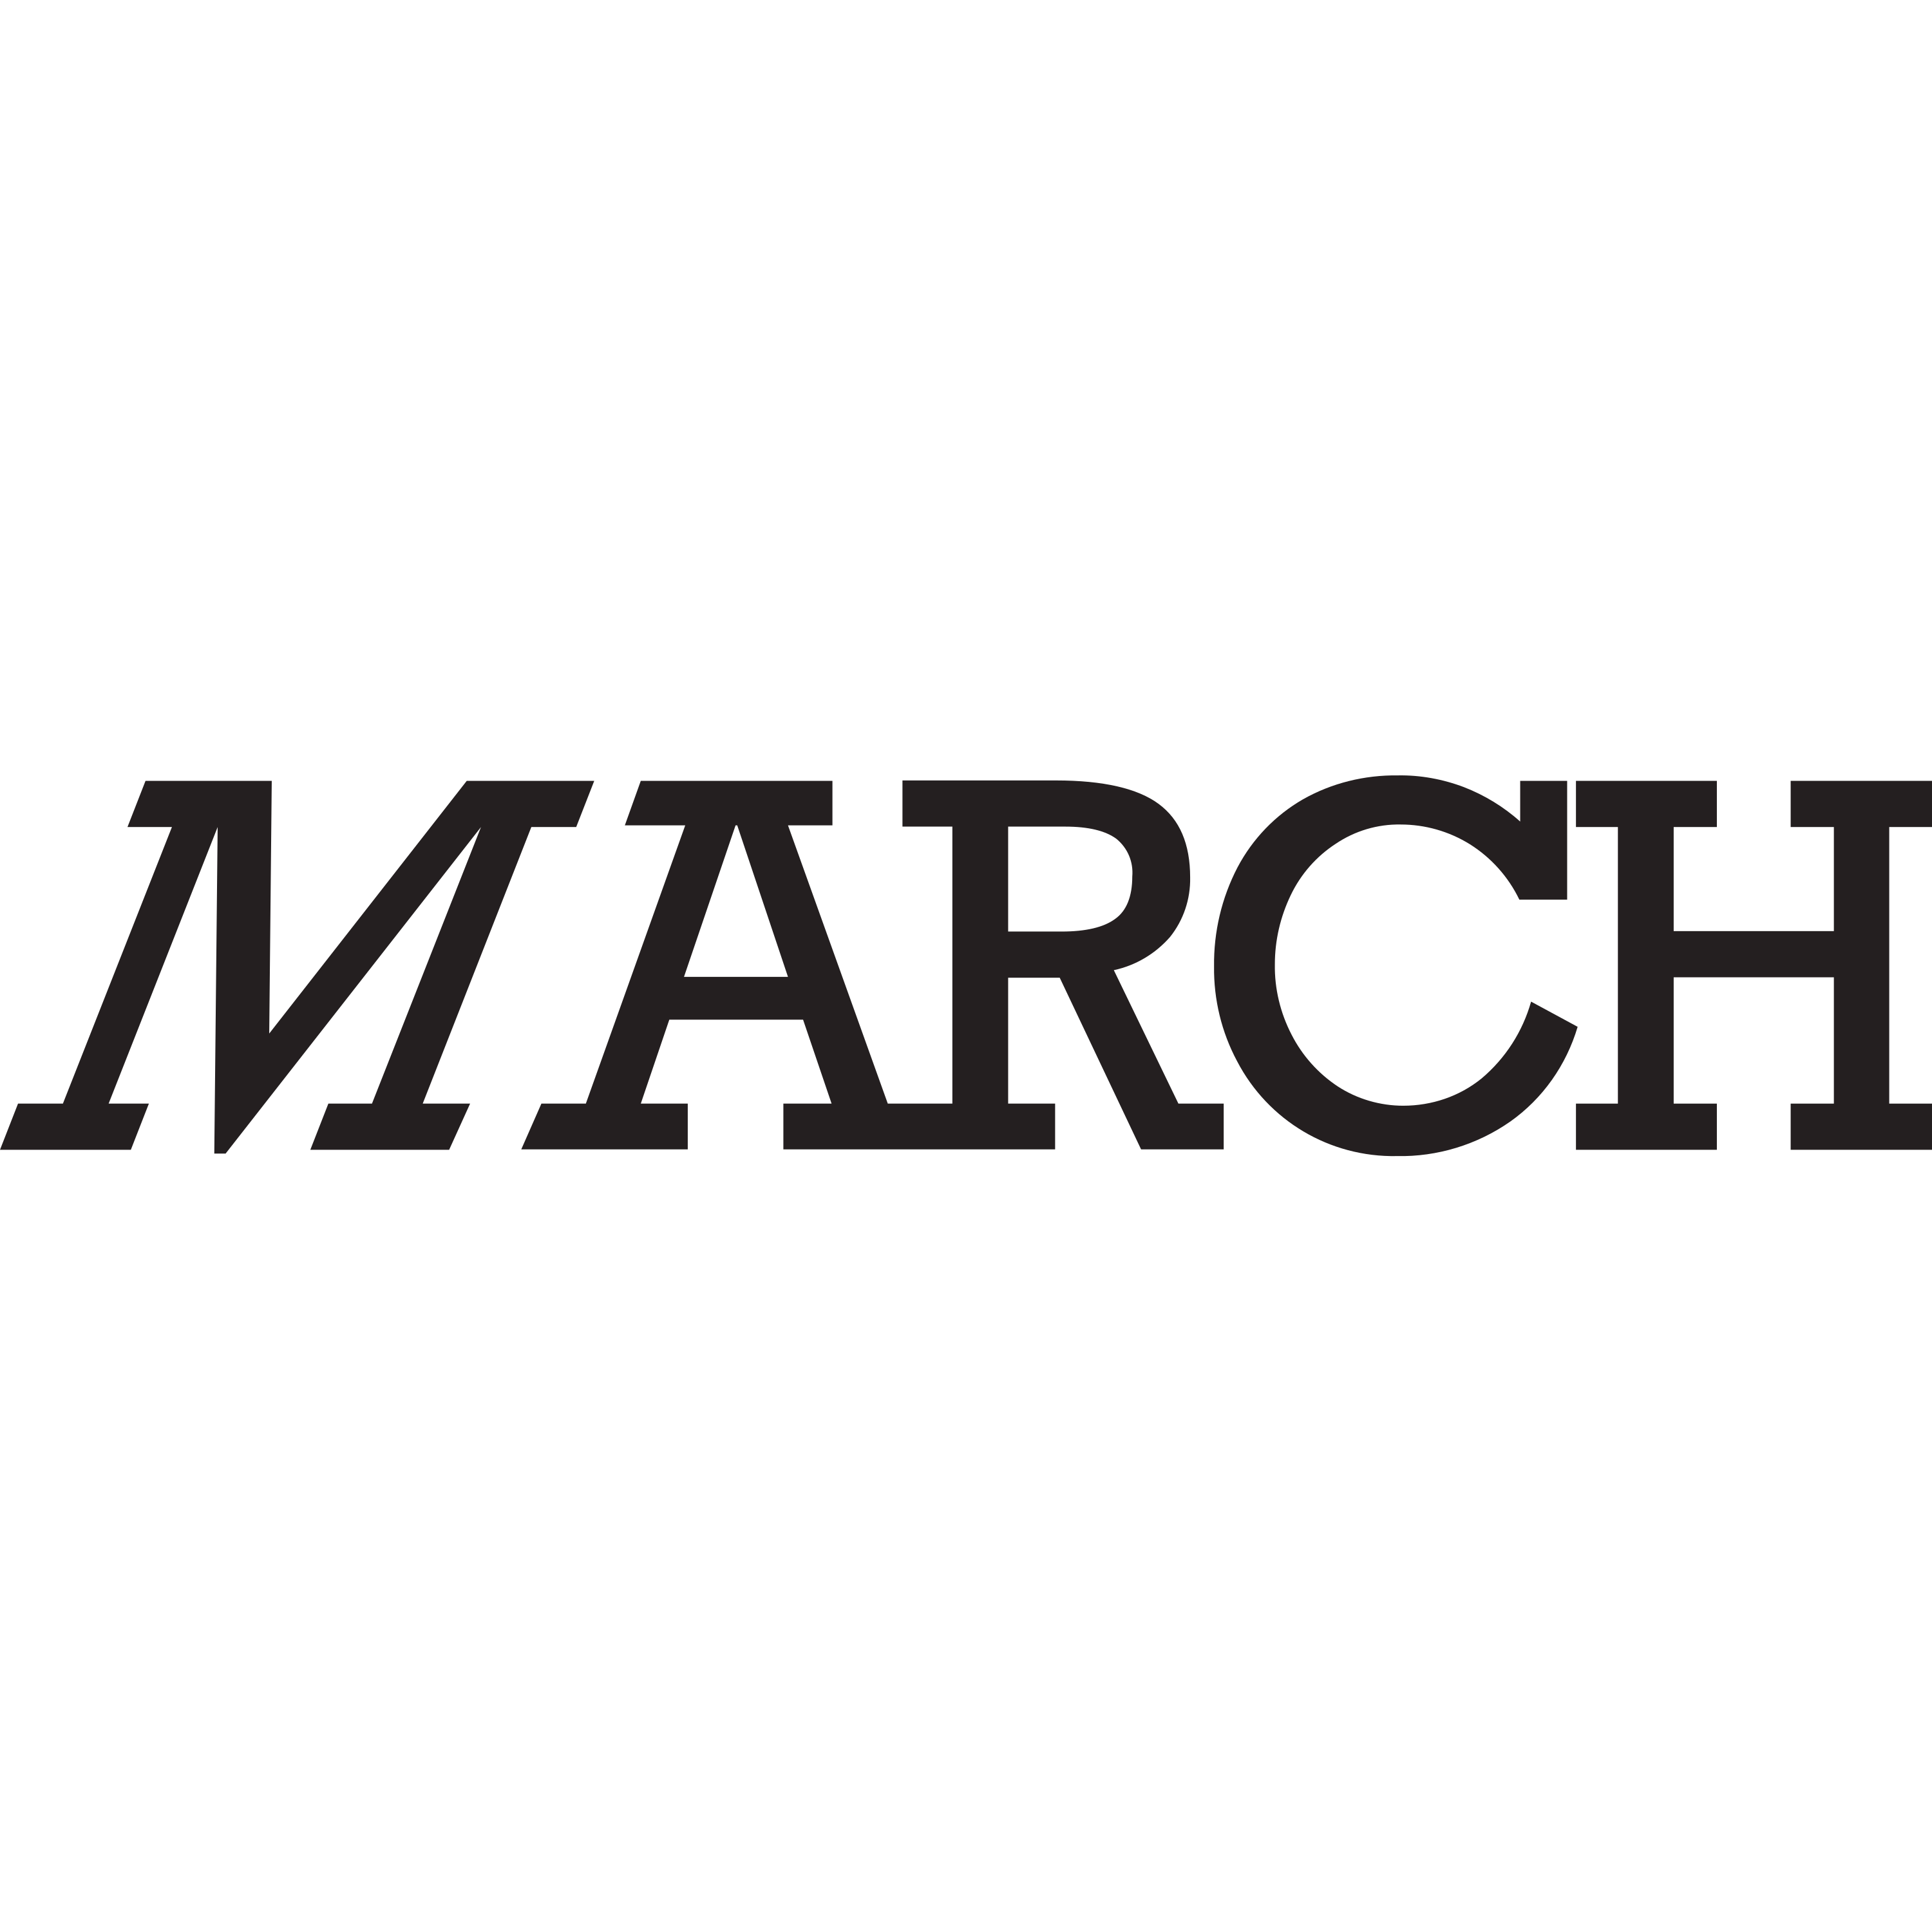 March PR Logo  Transparent Image